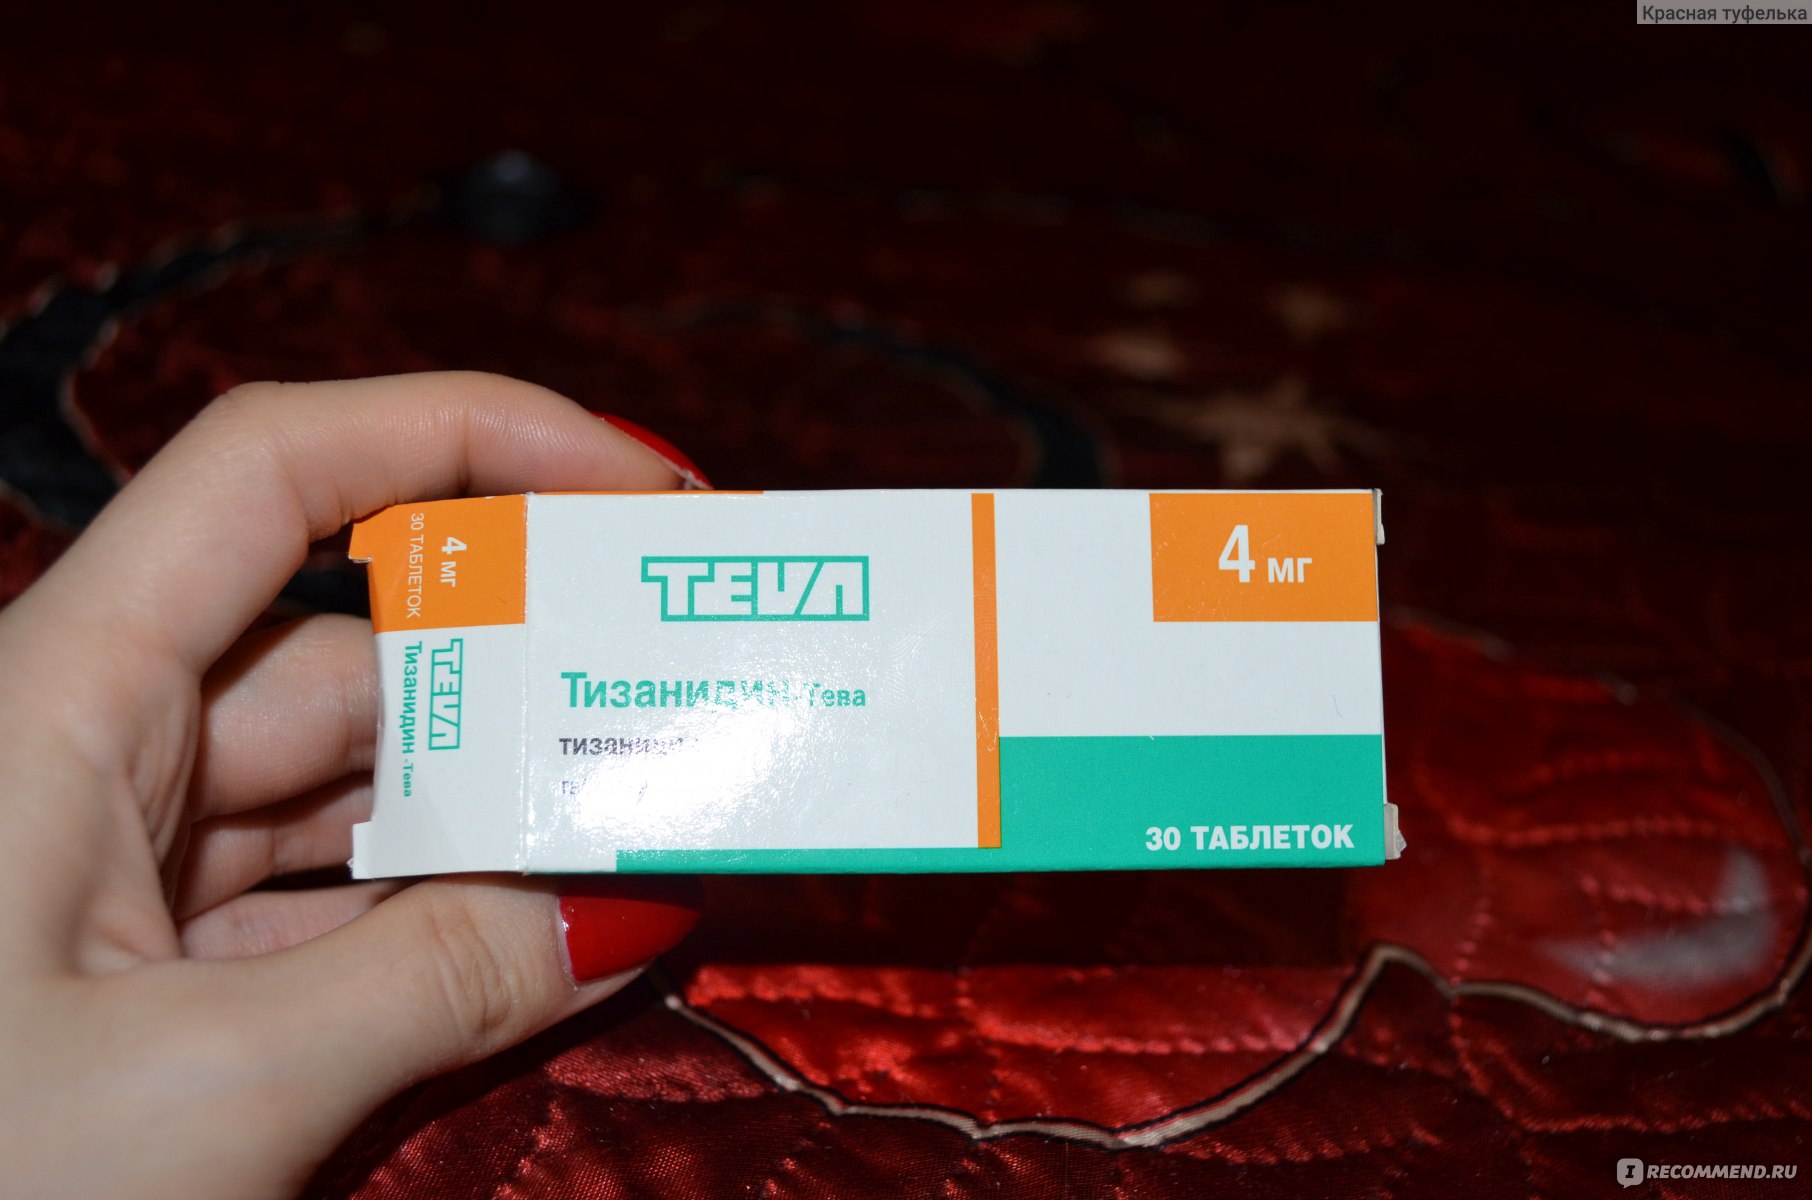 Лекарственный препарат TeVa Тизанидин Тева - «Применение миорелаксанта .